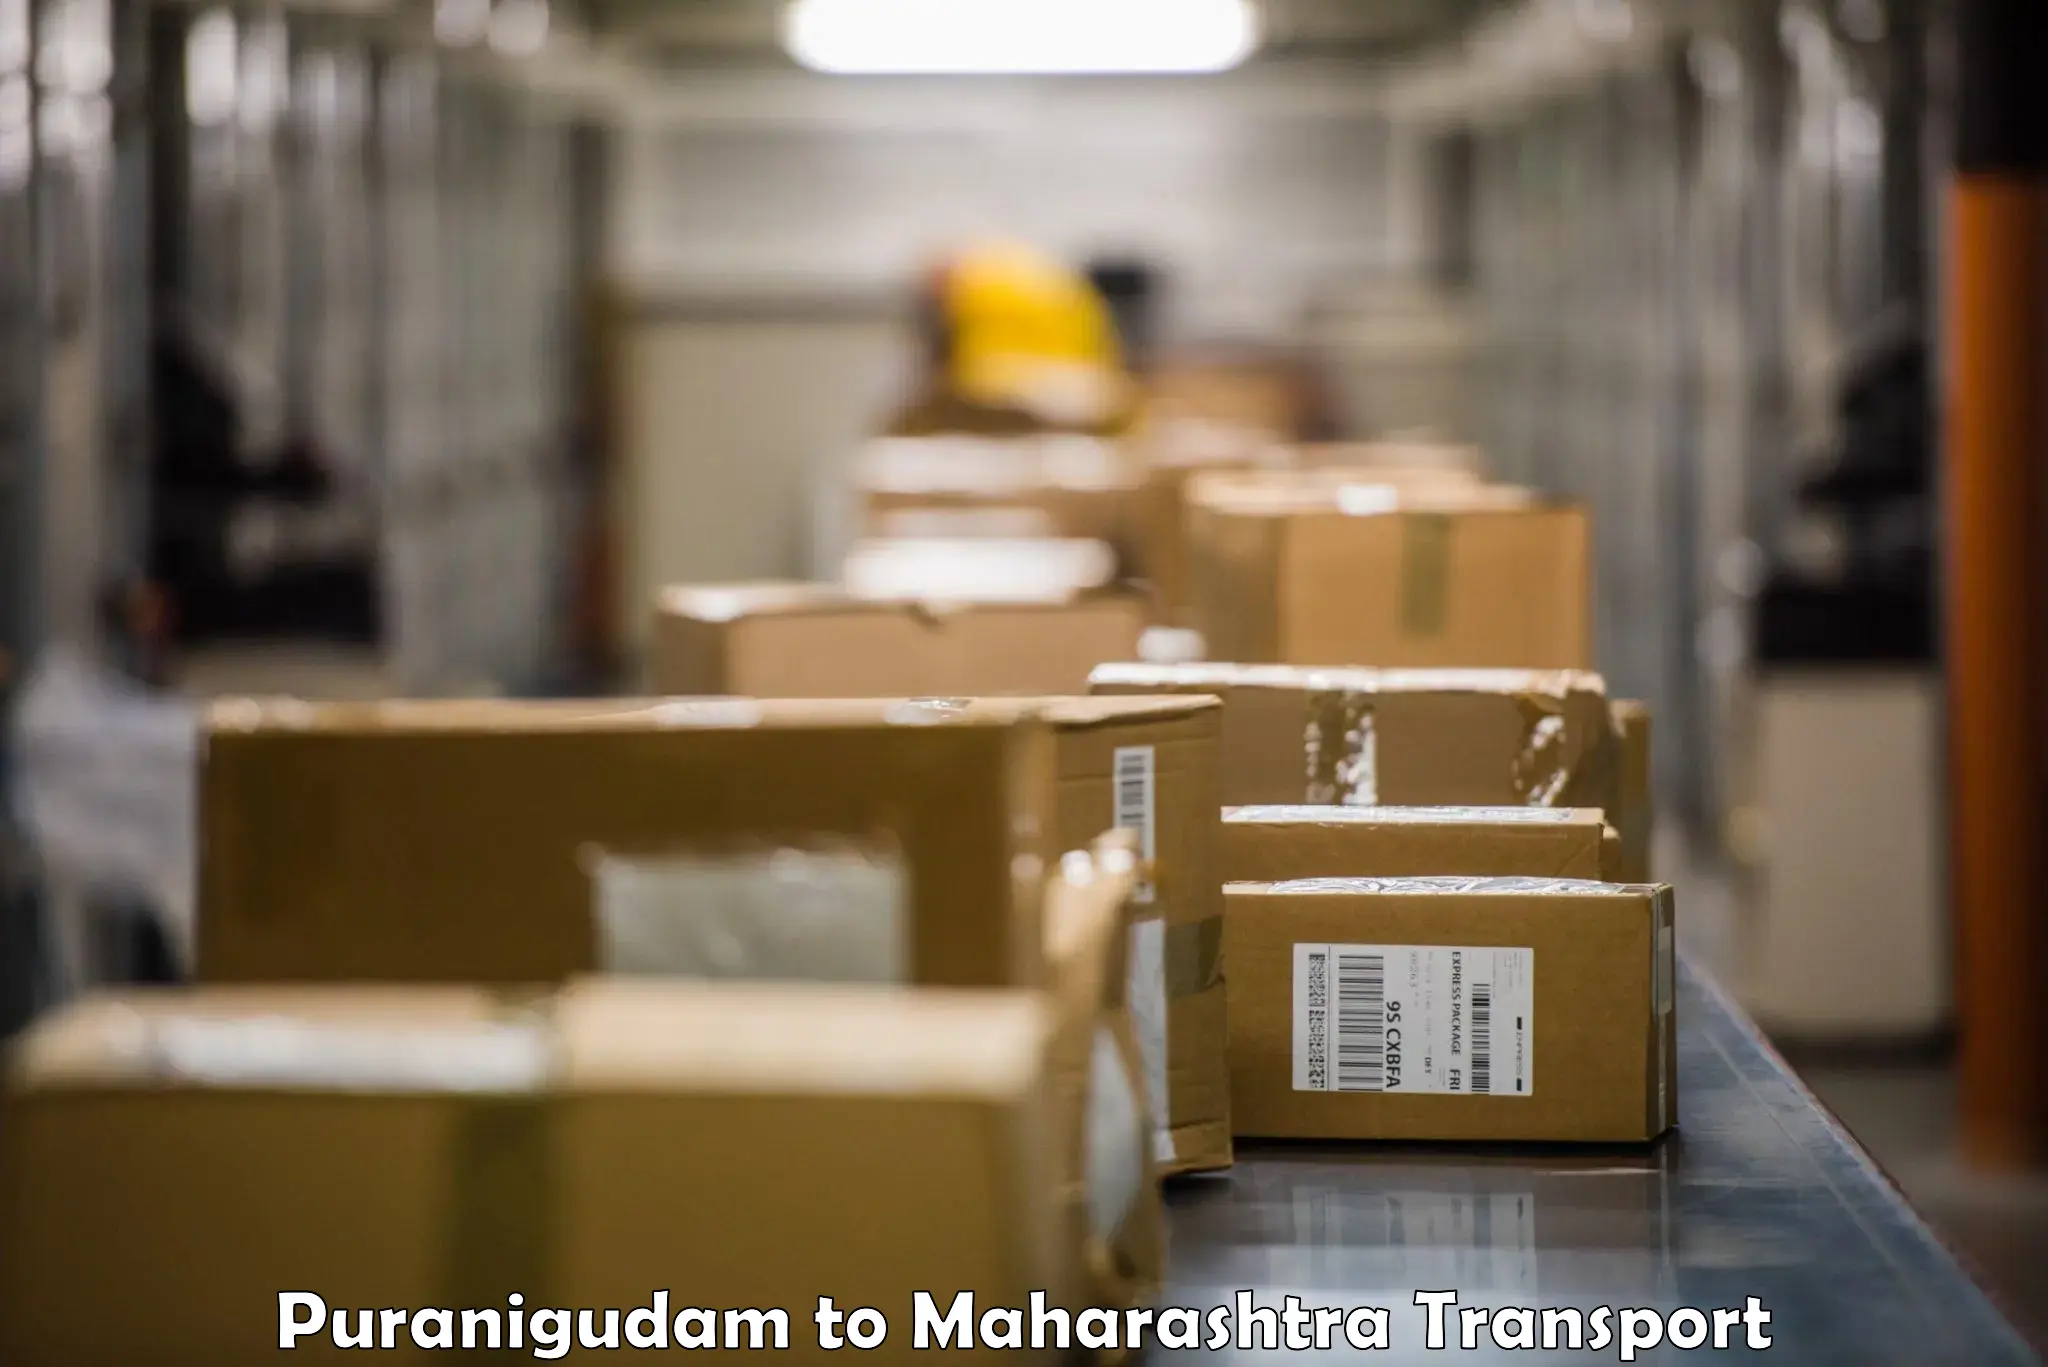 Goods delivery service Puranigudam to Kopargaon